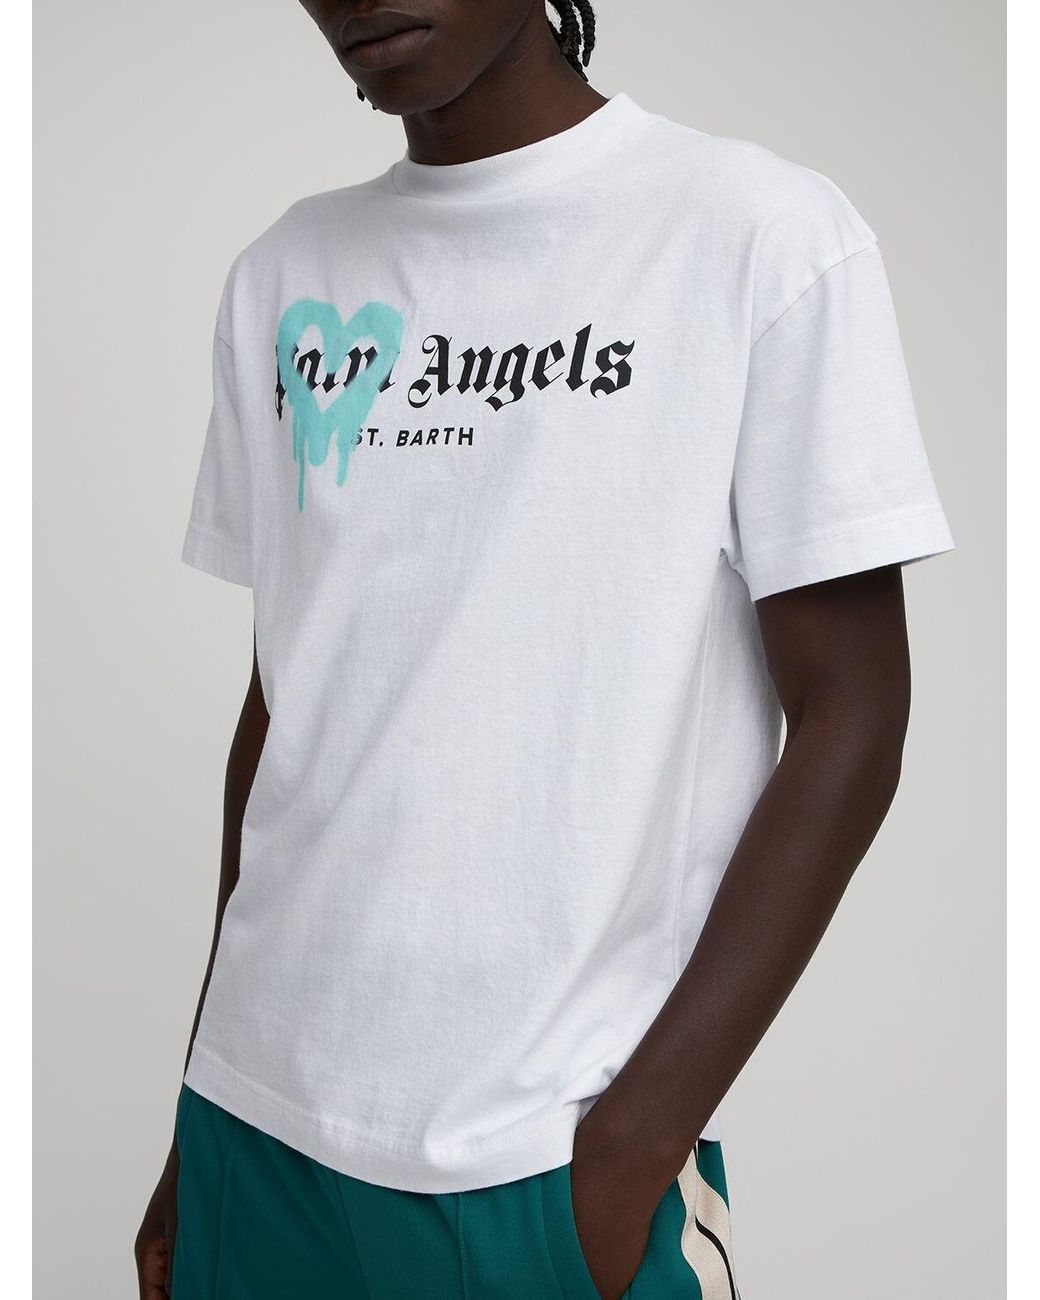 PALM ANGELS - ST. Barth Sprayed T-Shirt